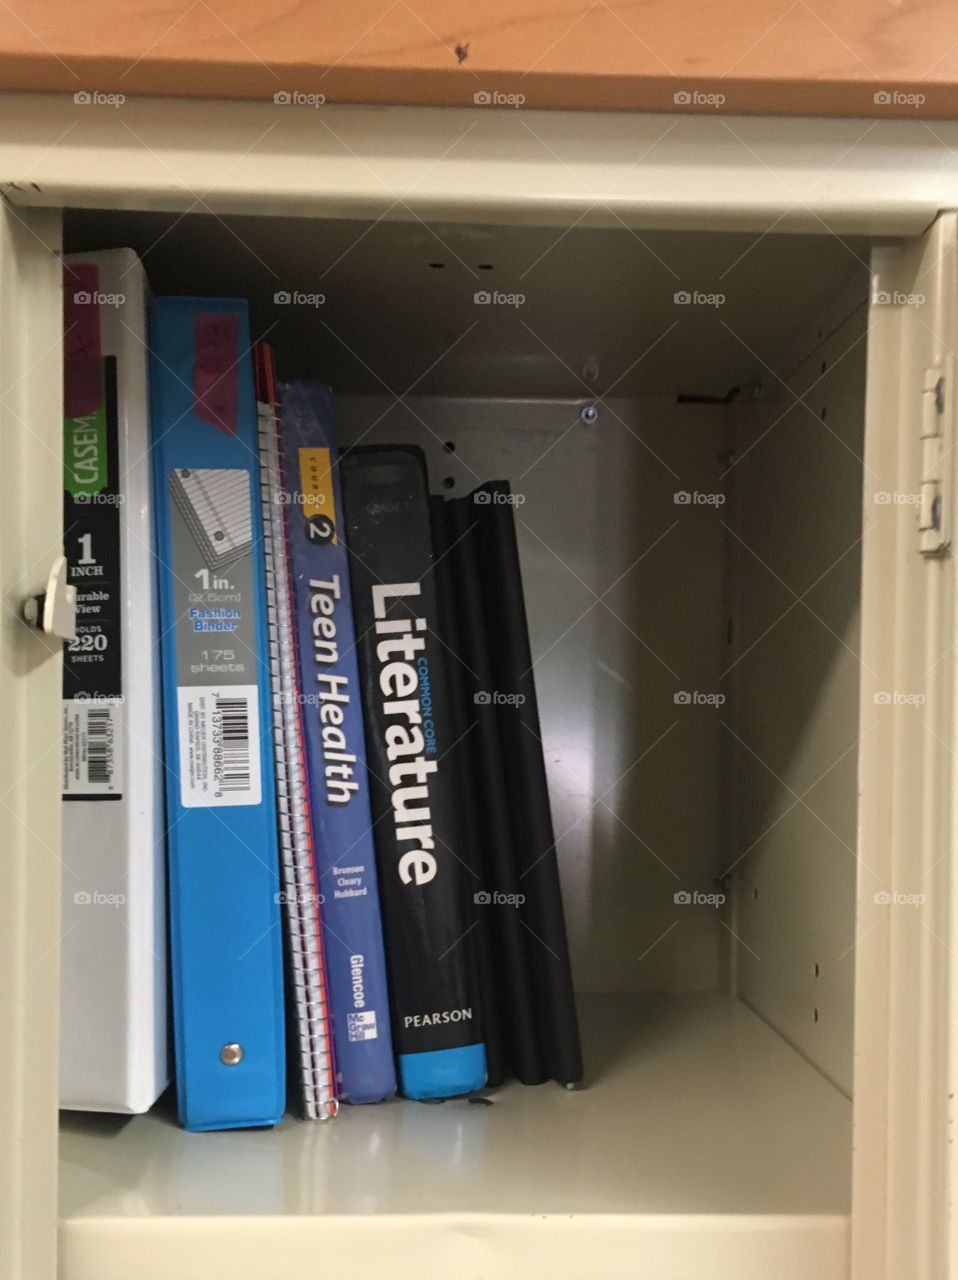 Open locker, top shelf, textbooks and binders